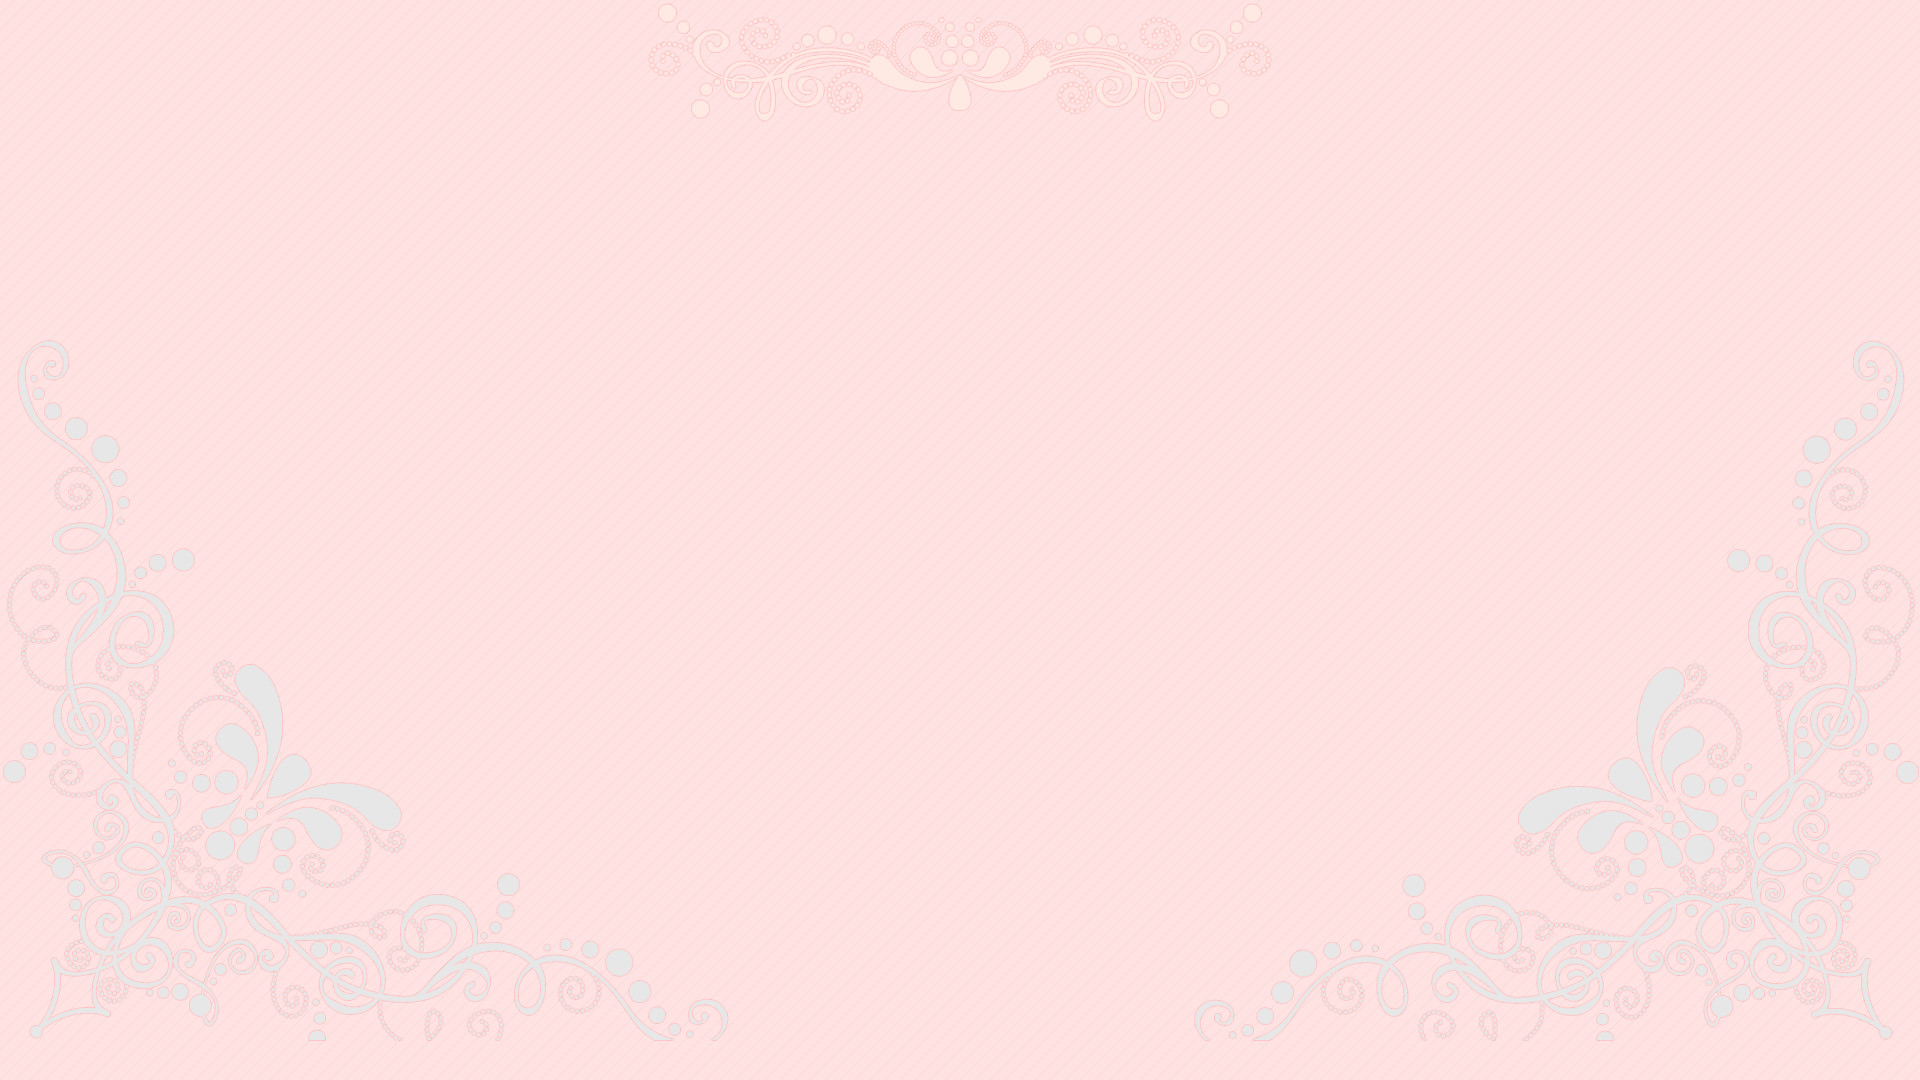 1920x1080 Pink Background Wallpaper - WallpaperSafari ...